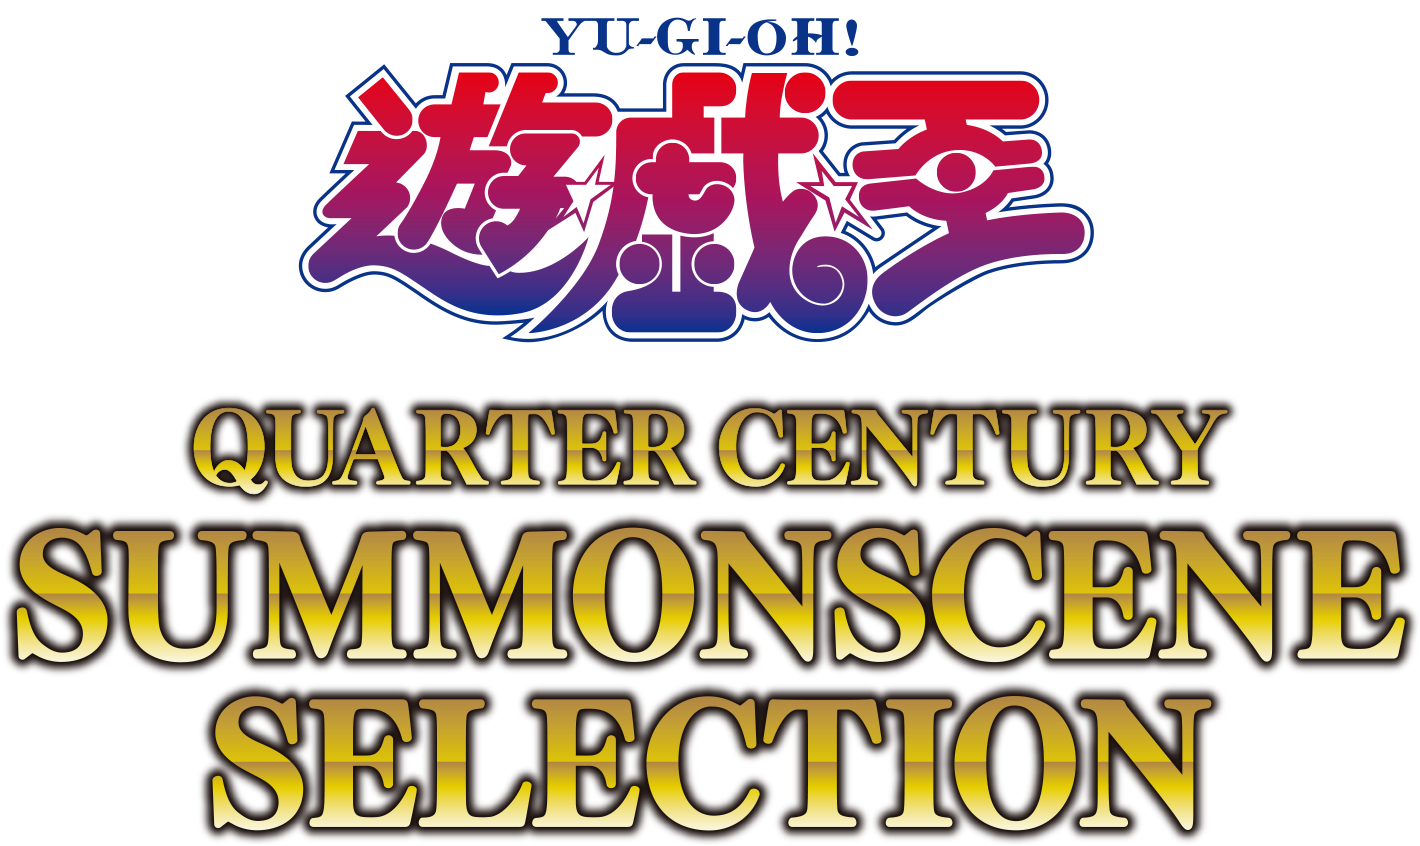 YU-GI-OH! QUARTER CENTURY SUMMONSCENE SELECTION